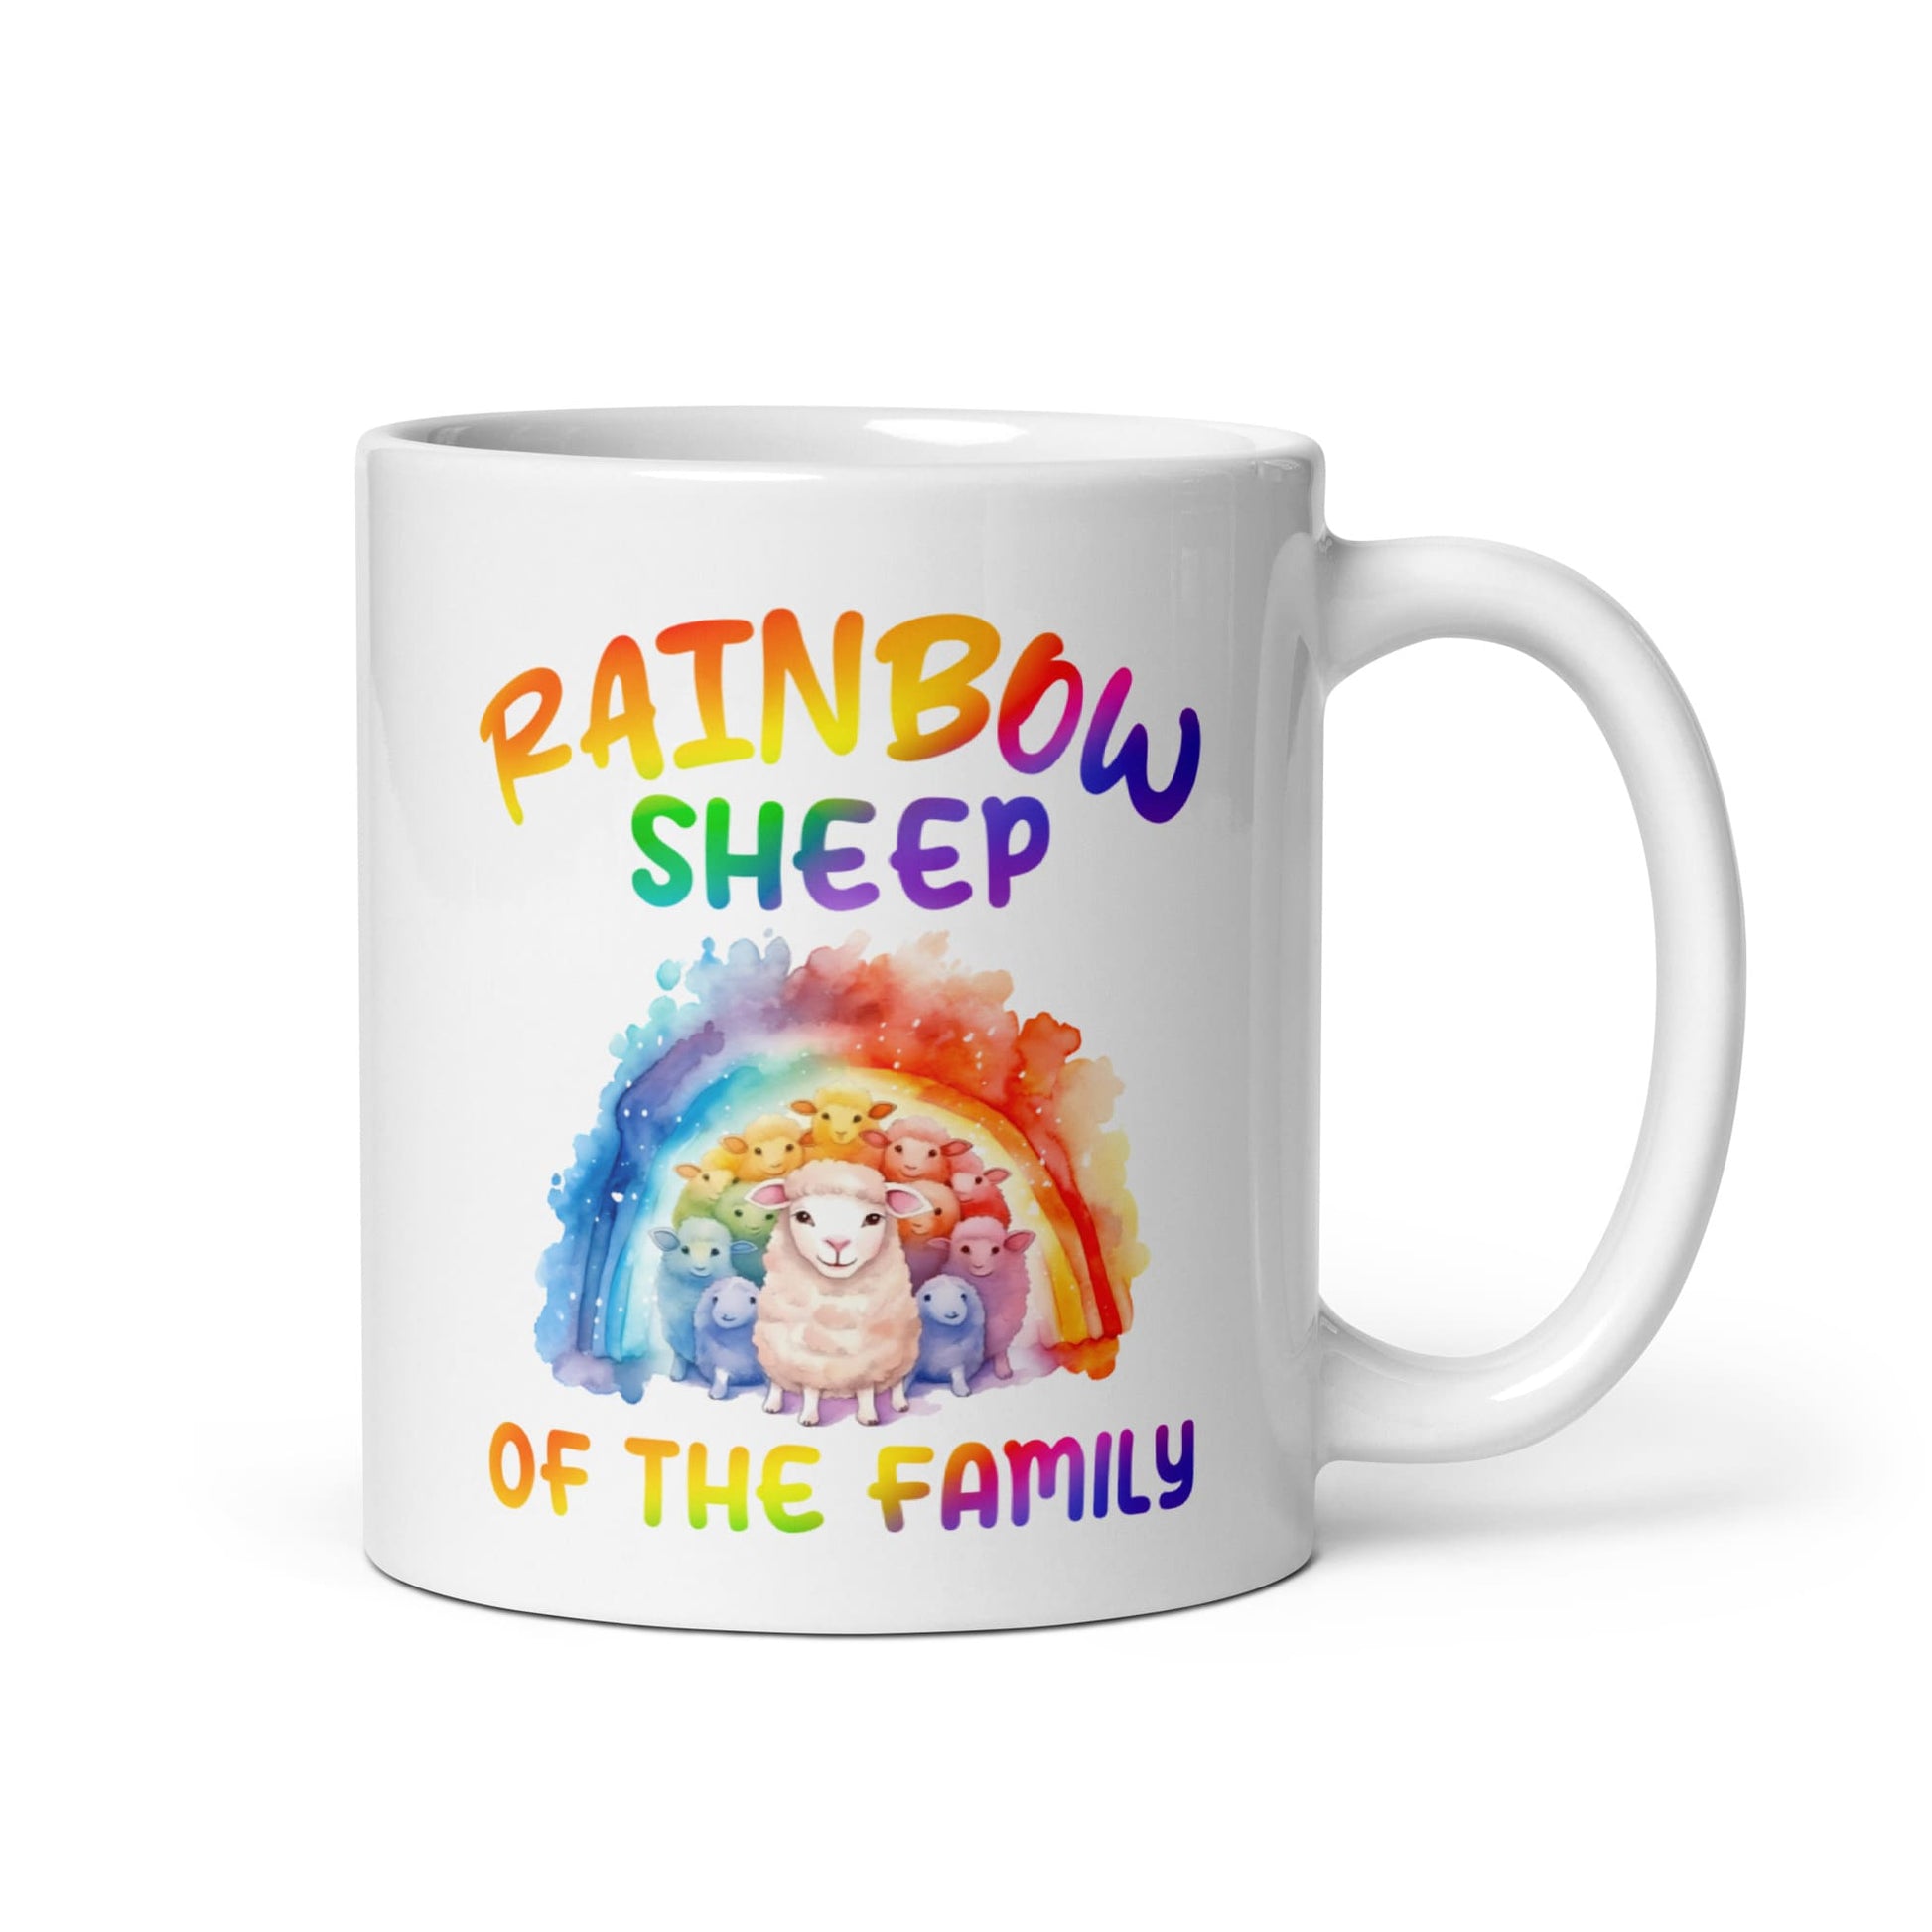 LGBTQ pride mug, rainbow sheep of the family coffee or tea cup